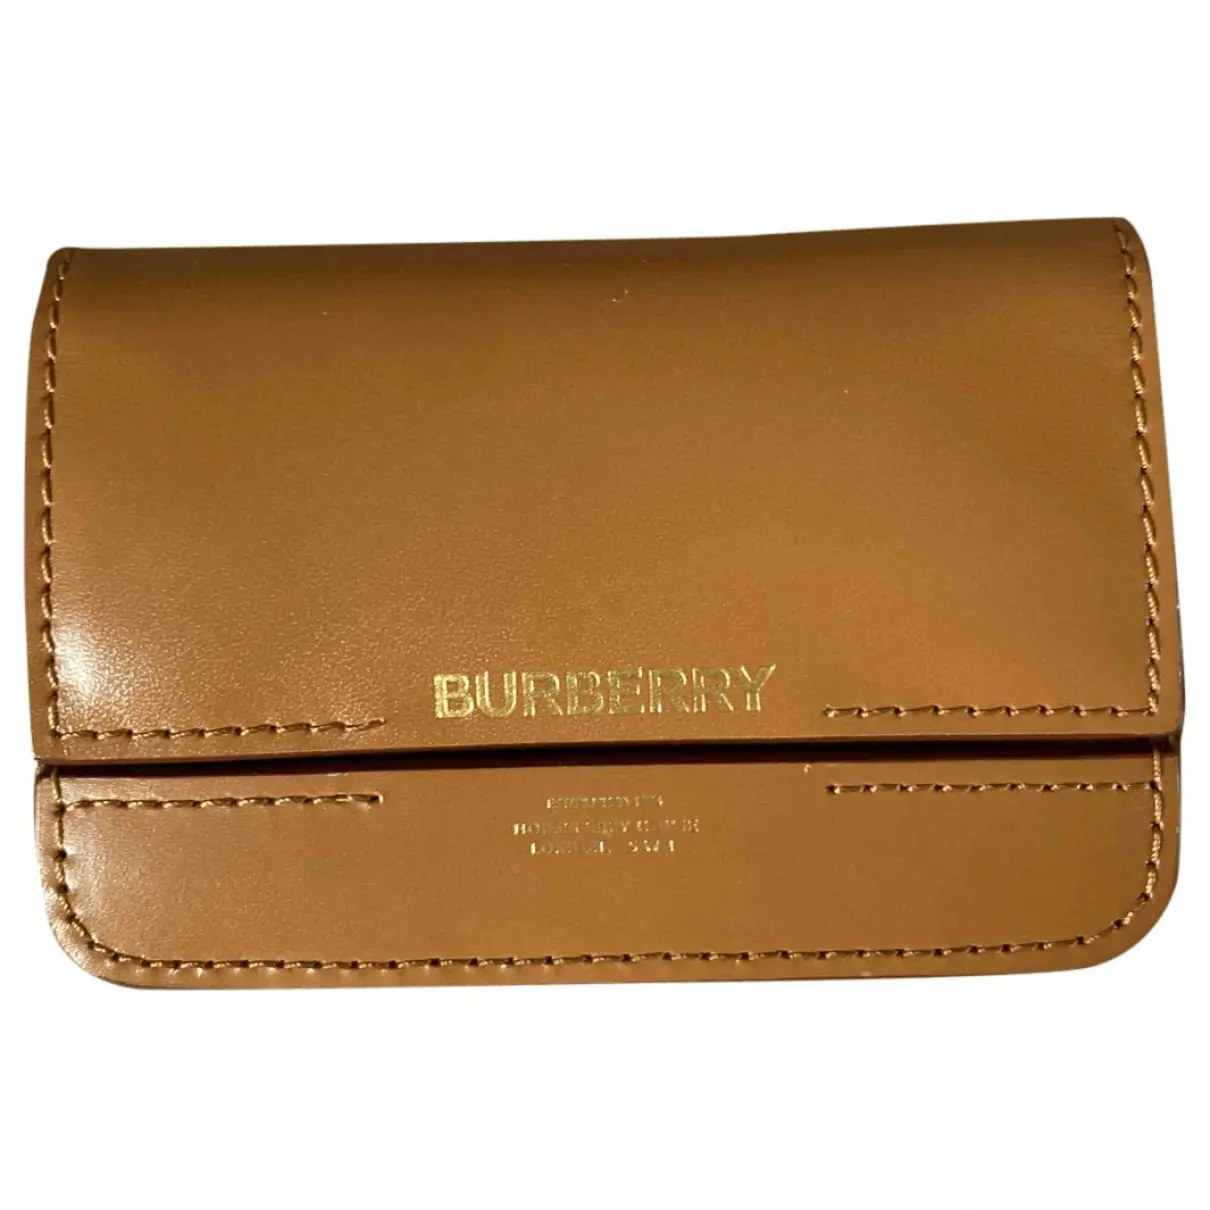 Leather purse Burberry